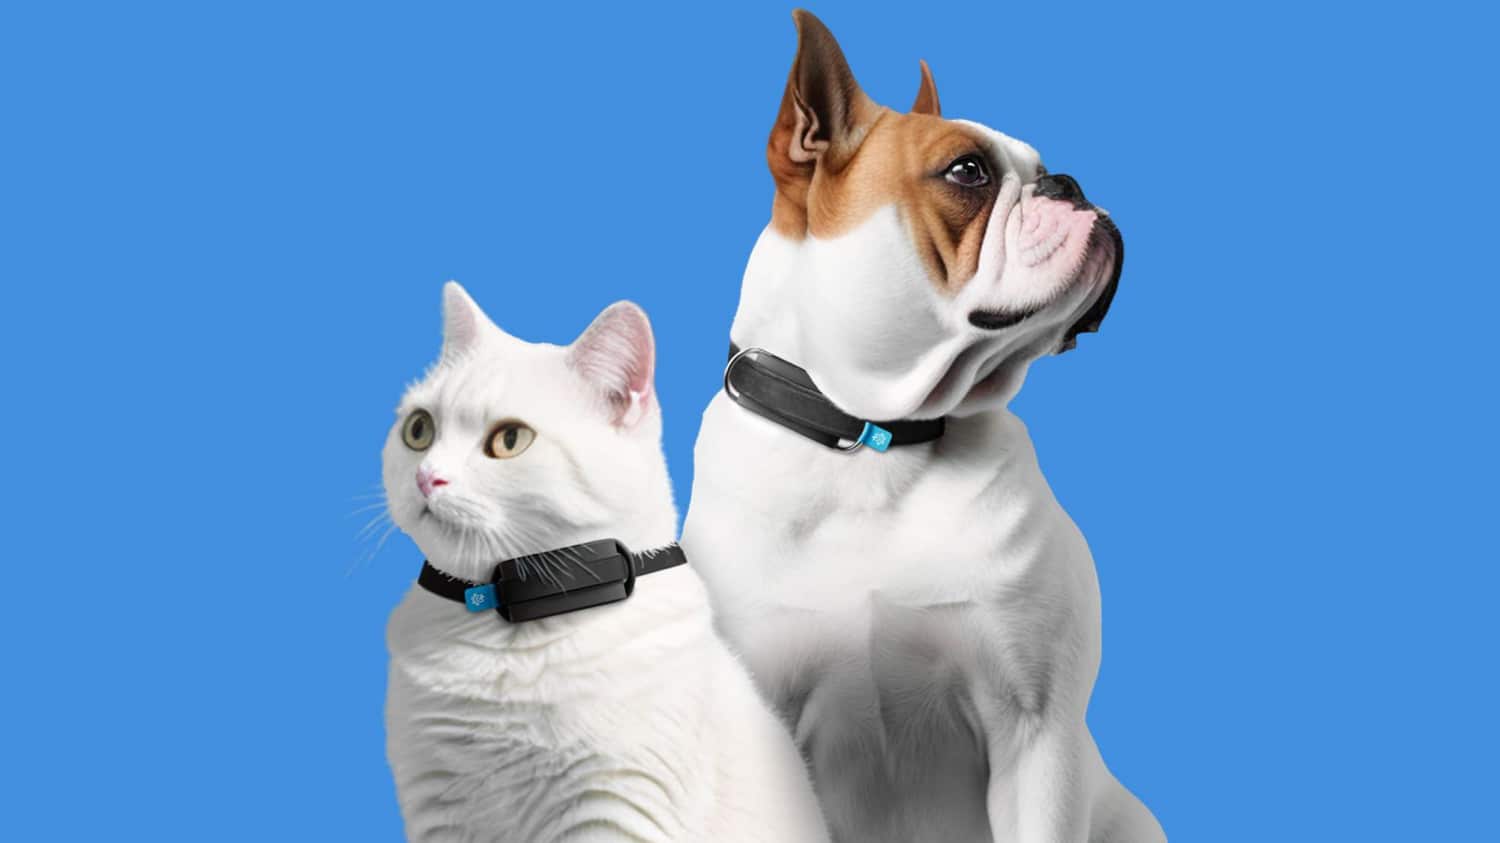 Invoxia Minitailz Smart Pet Tracker: Neuer Haustier-Tracker samt